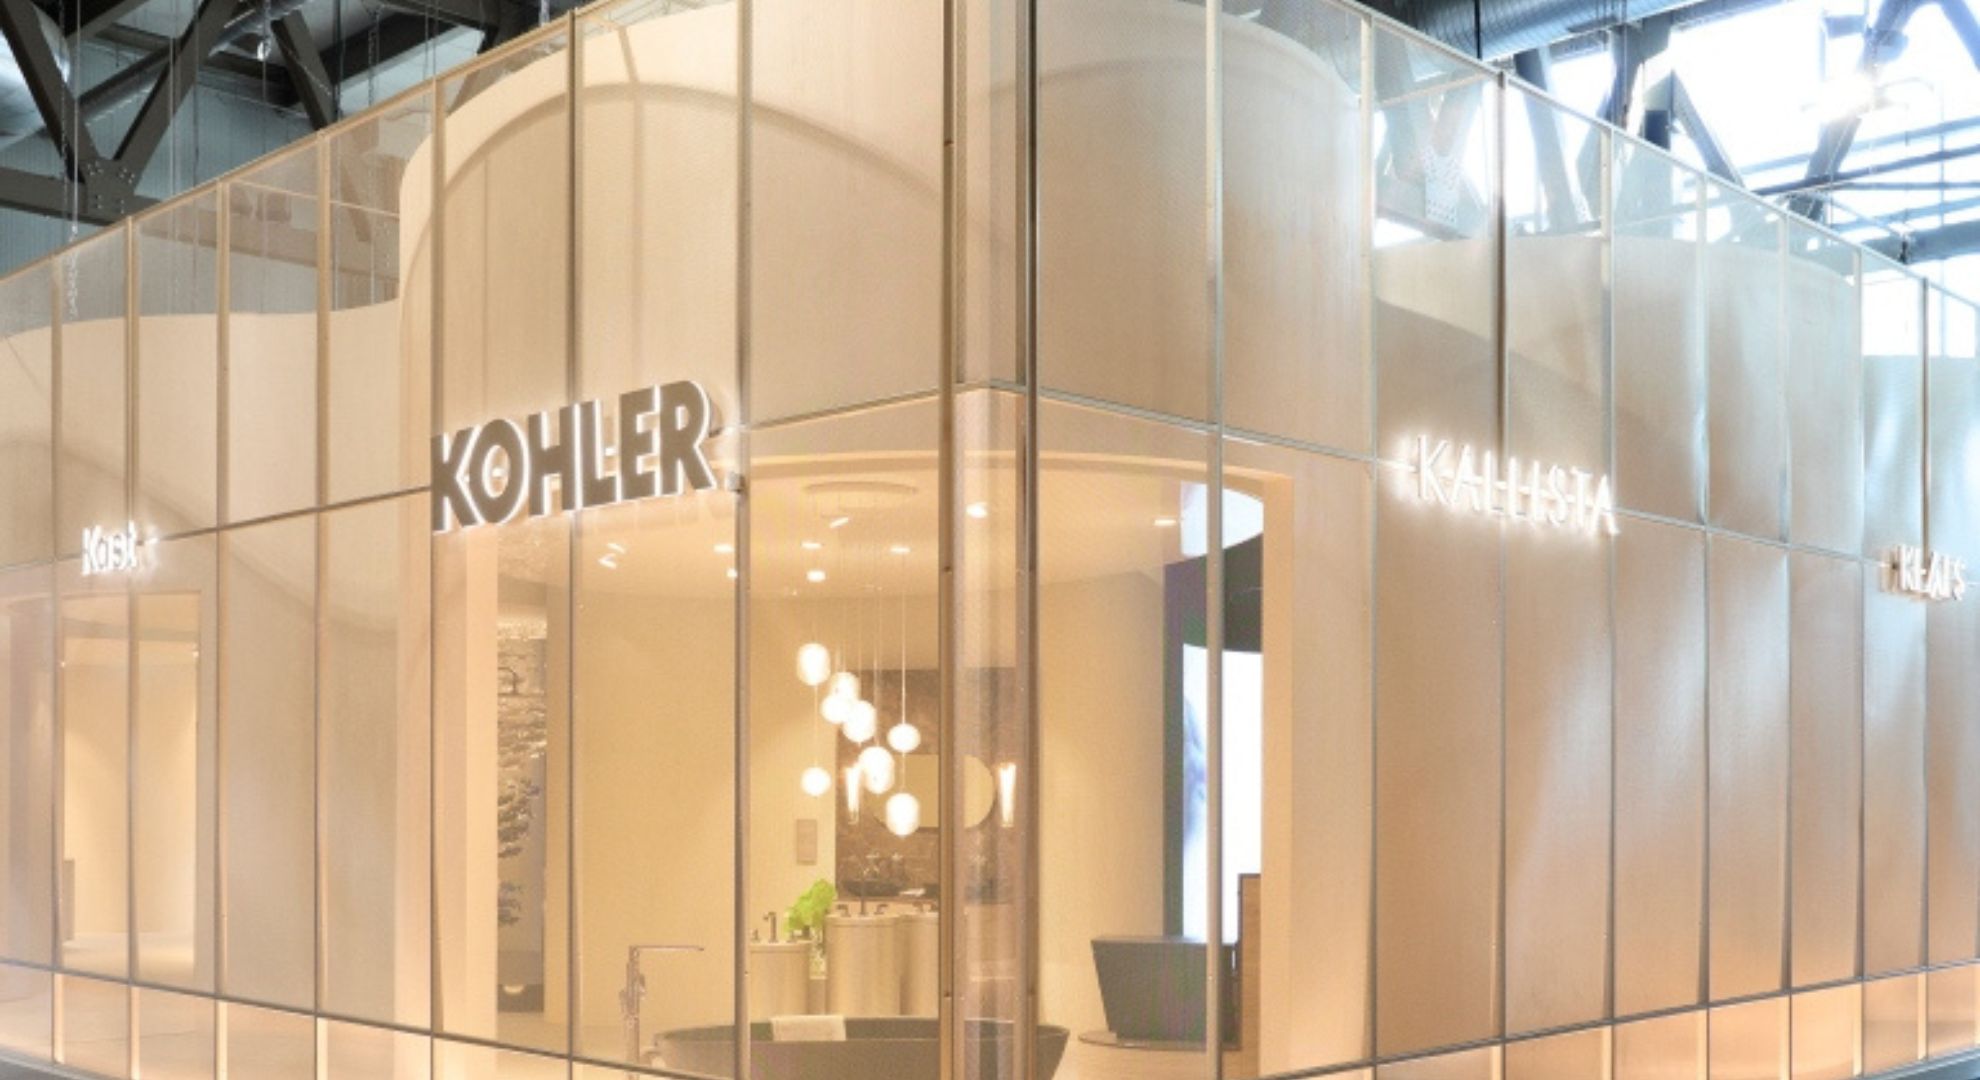 Kohler showcases Milan Design Week highlights, inspiring Filipino homes with world-class elegance